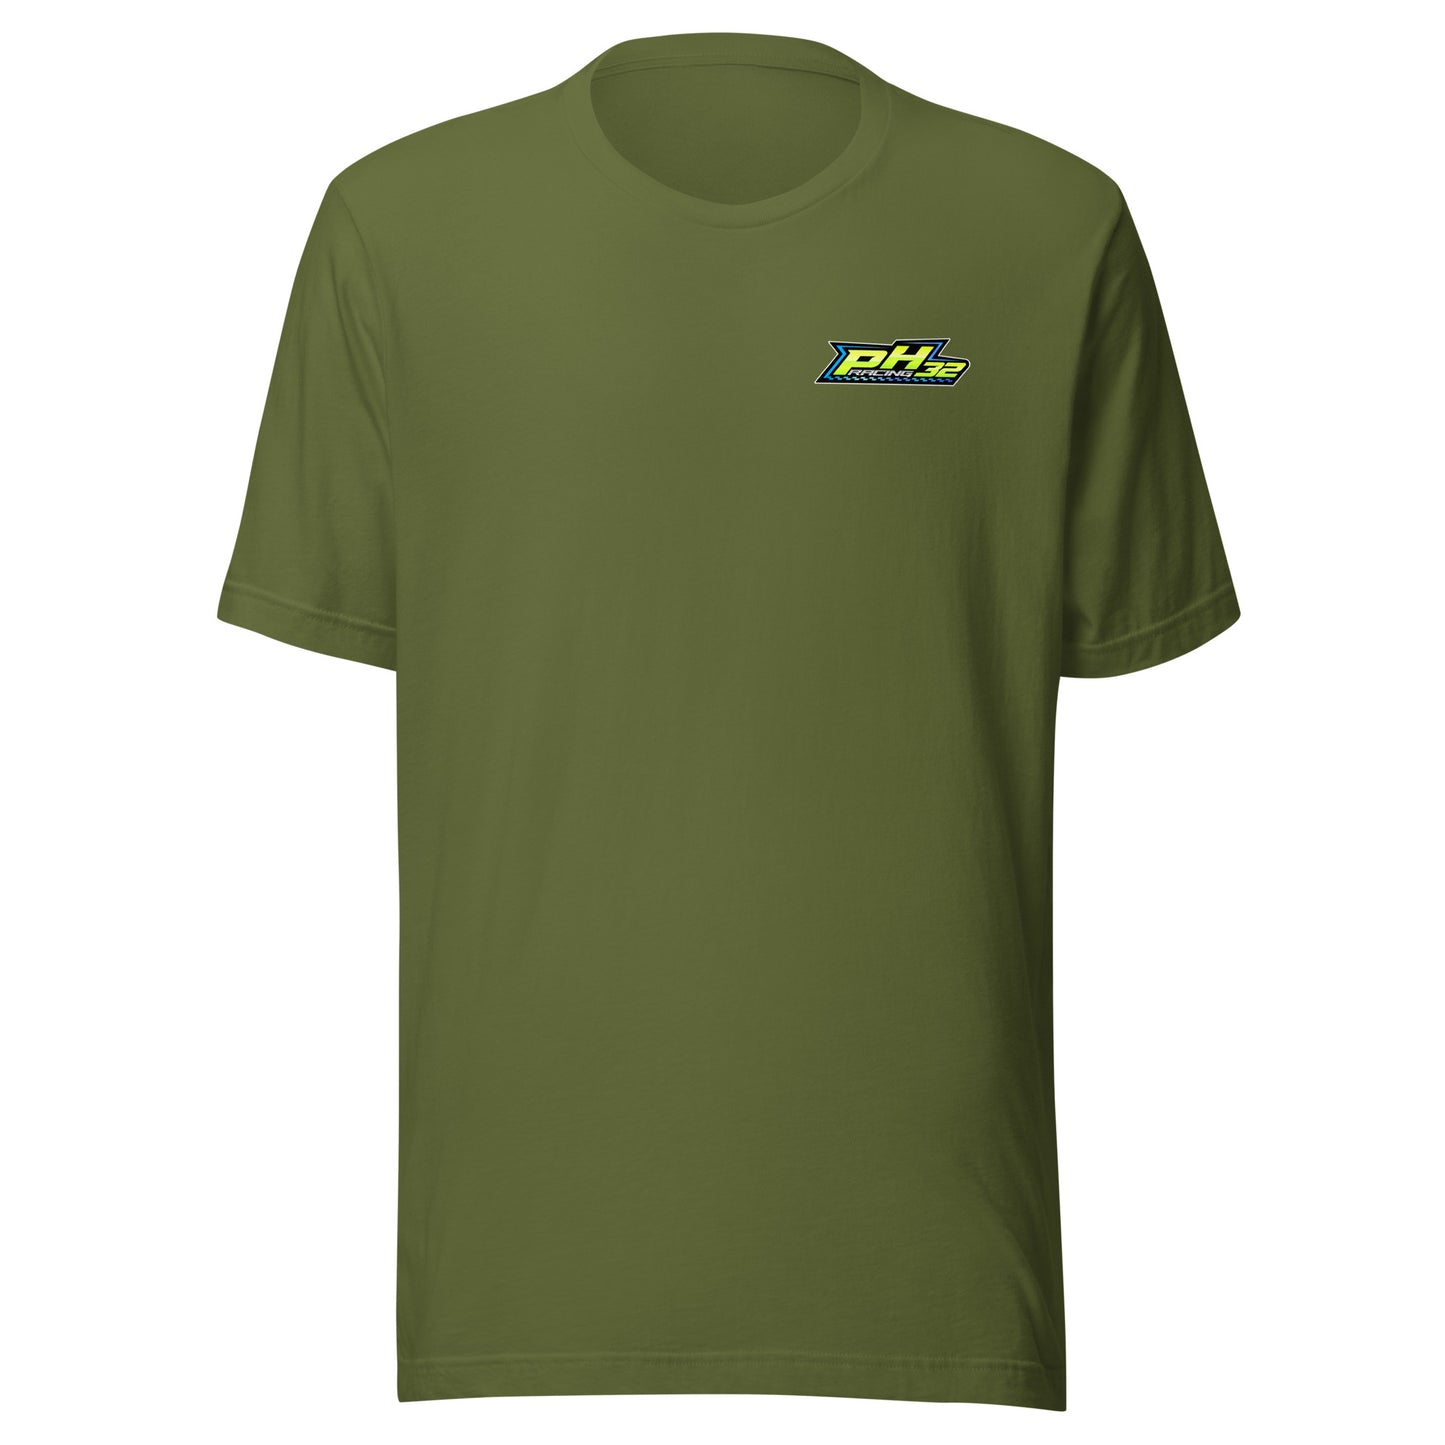 Pavyn Holland Racing Unisex T-Shirt